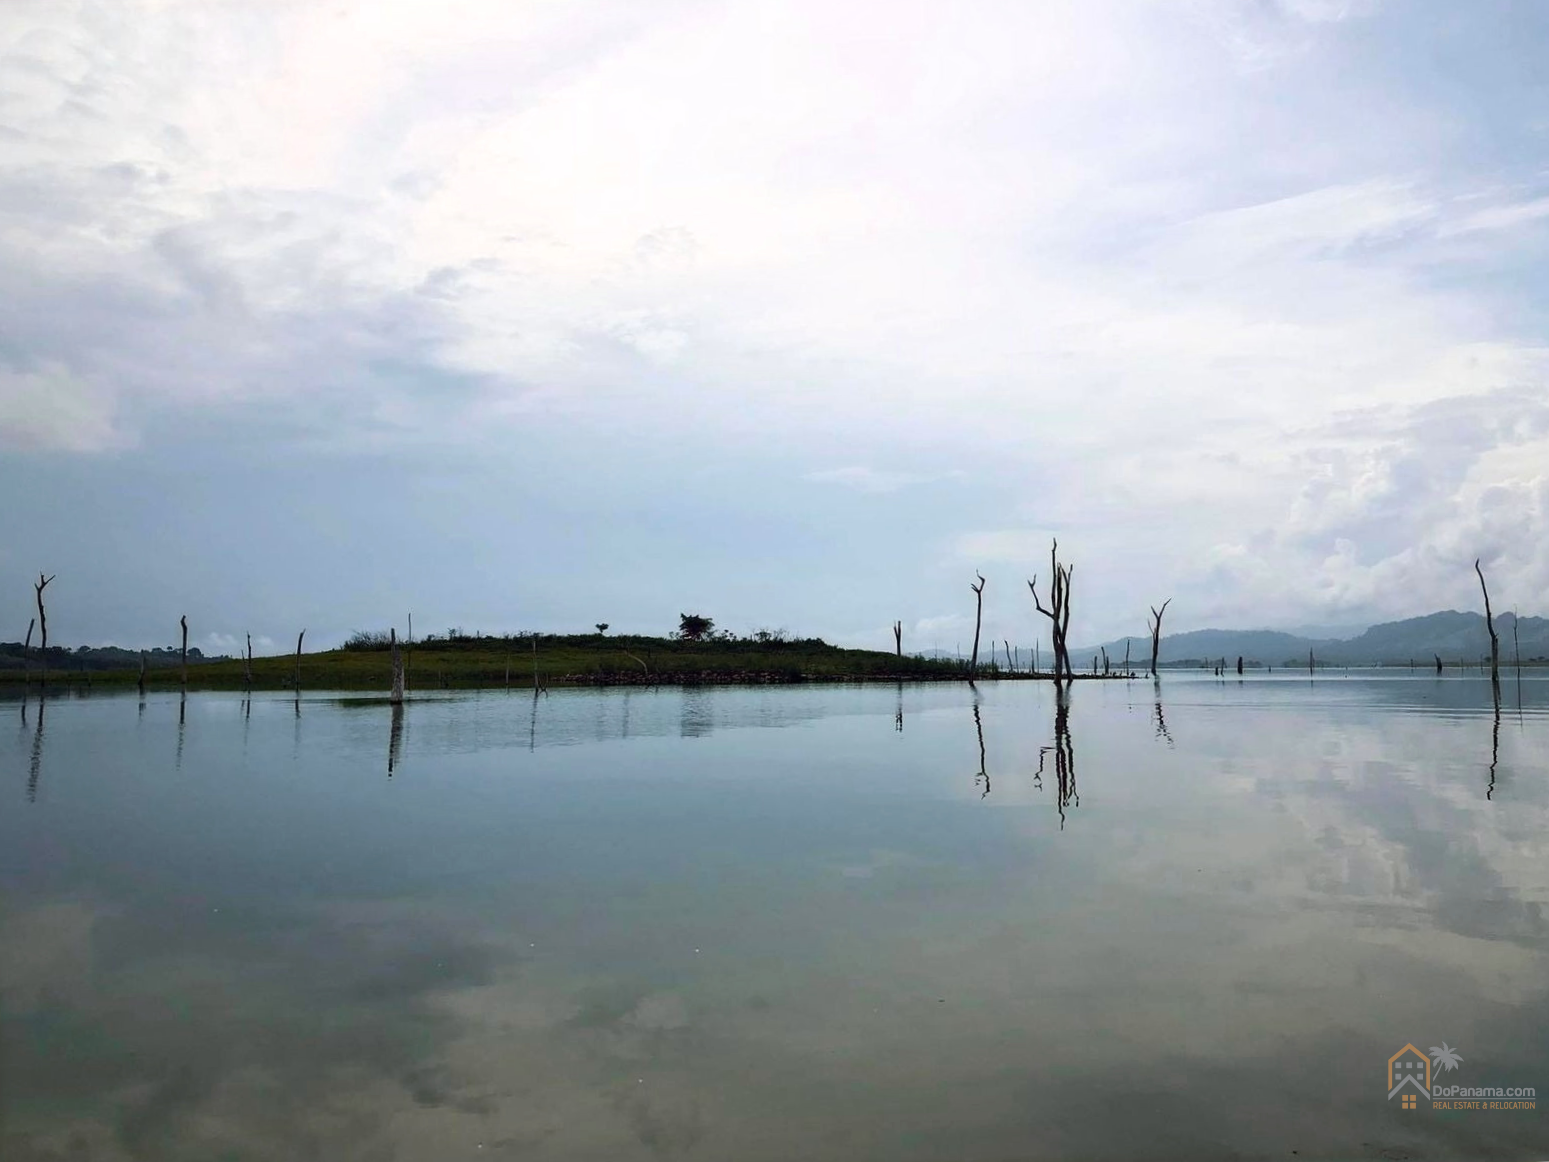 Private Island for Sale in Bayano Lake, Panama